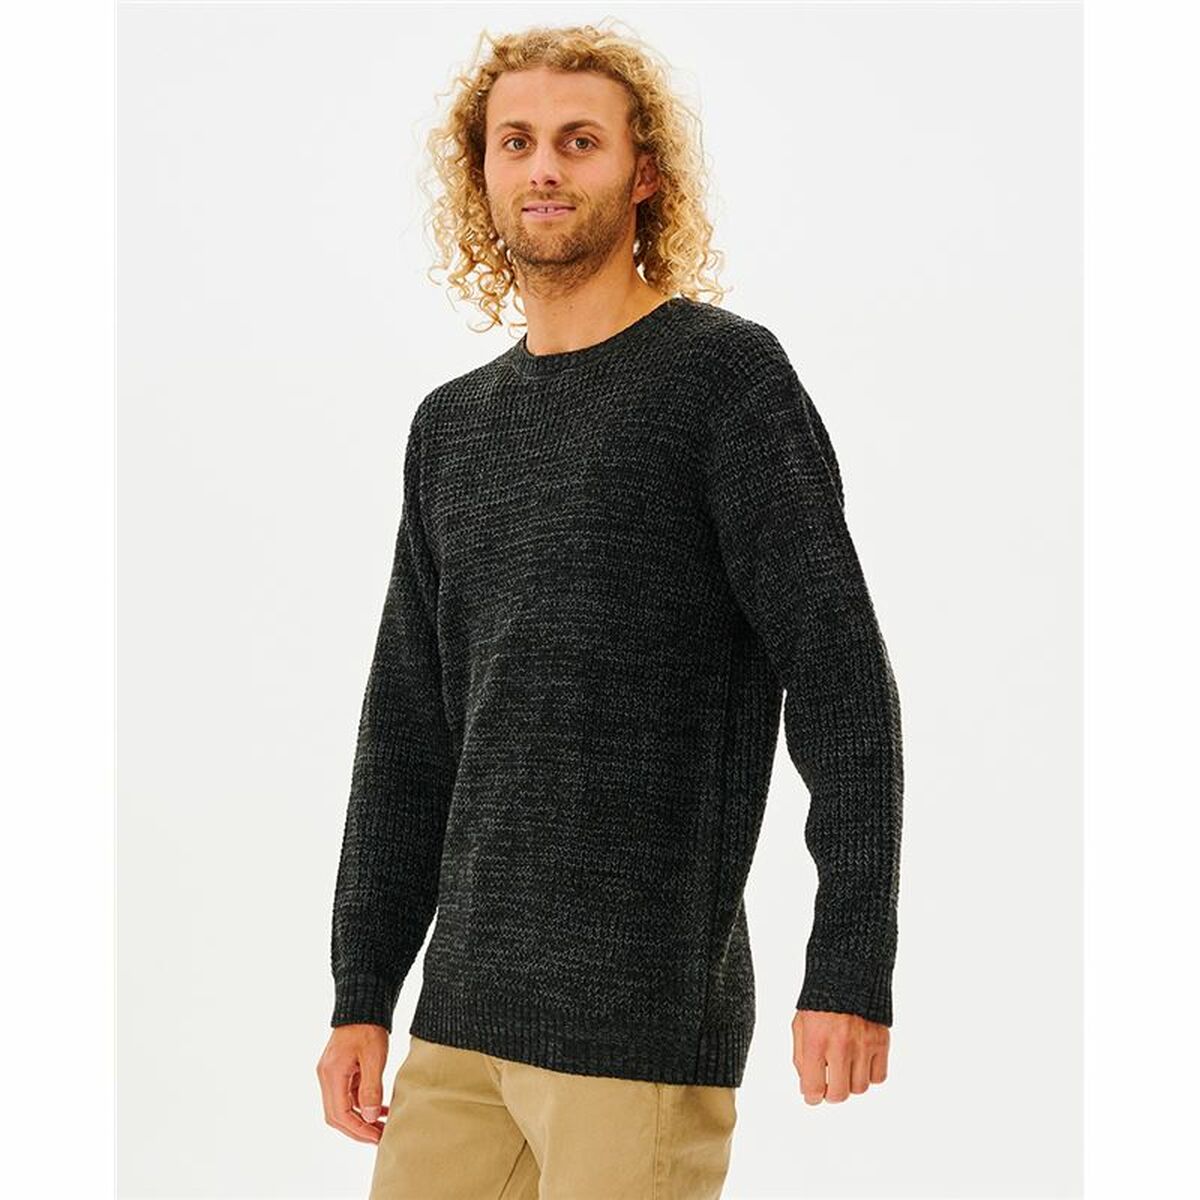 Kaufe Herren Sweater ohne Kapuze Rip Curl Tide Schwarz bei AWK Flagship um € 60.00